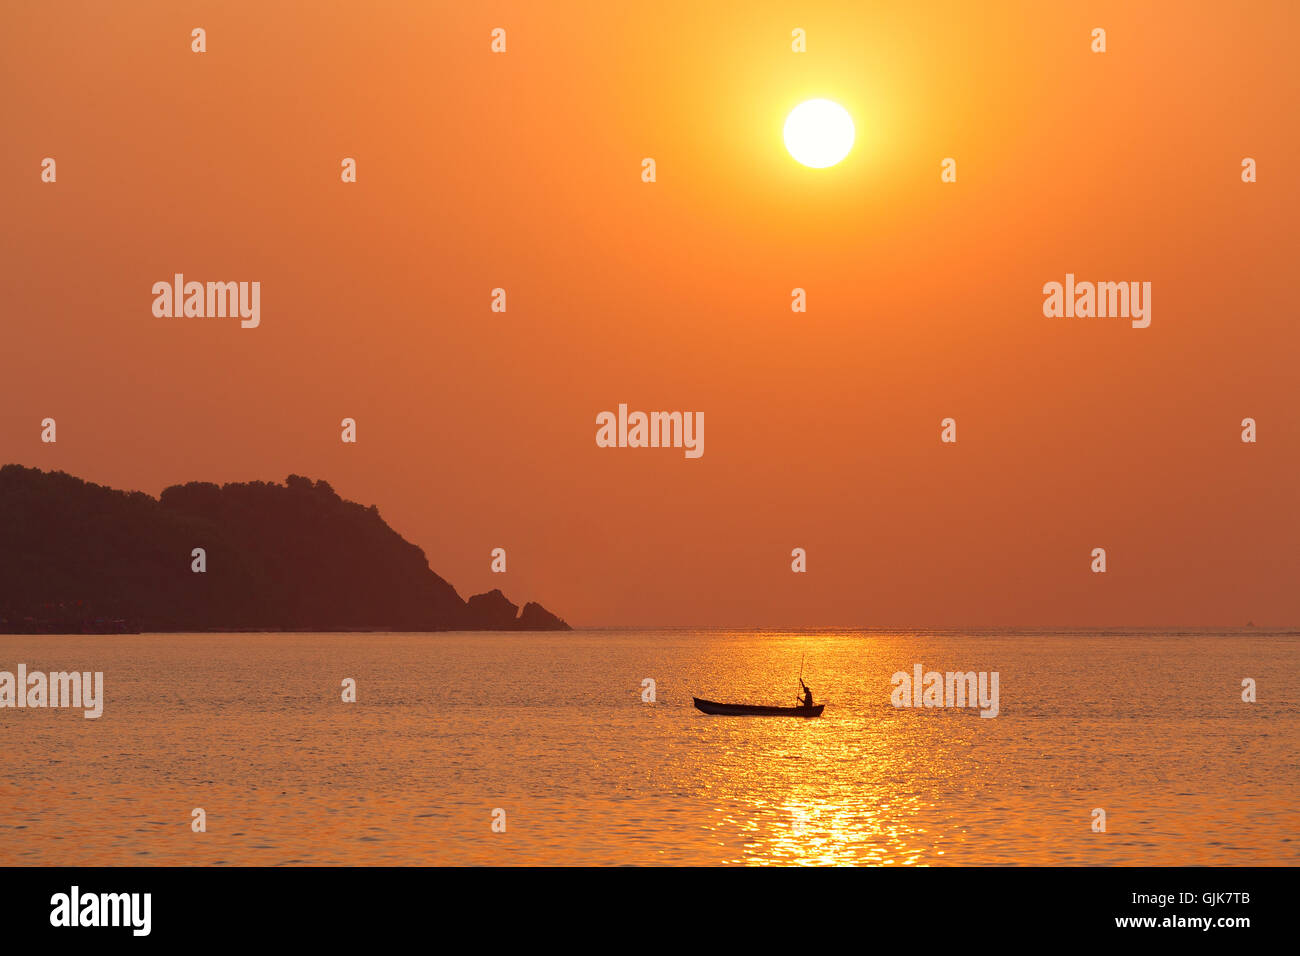 Goa-Sonnenuntergang über Meer Stockfoto